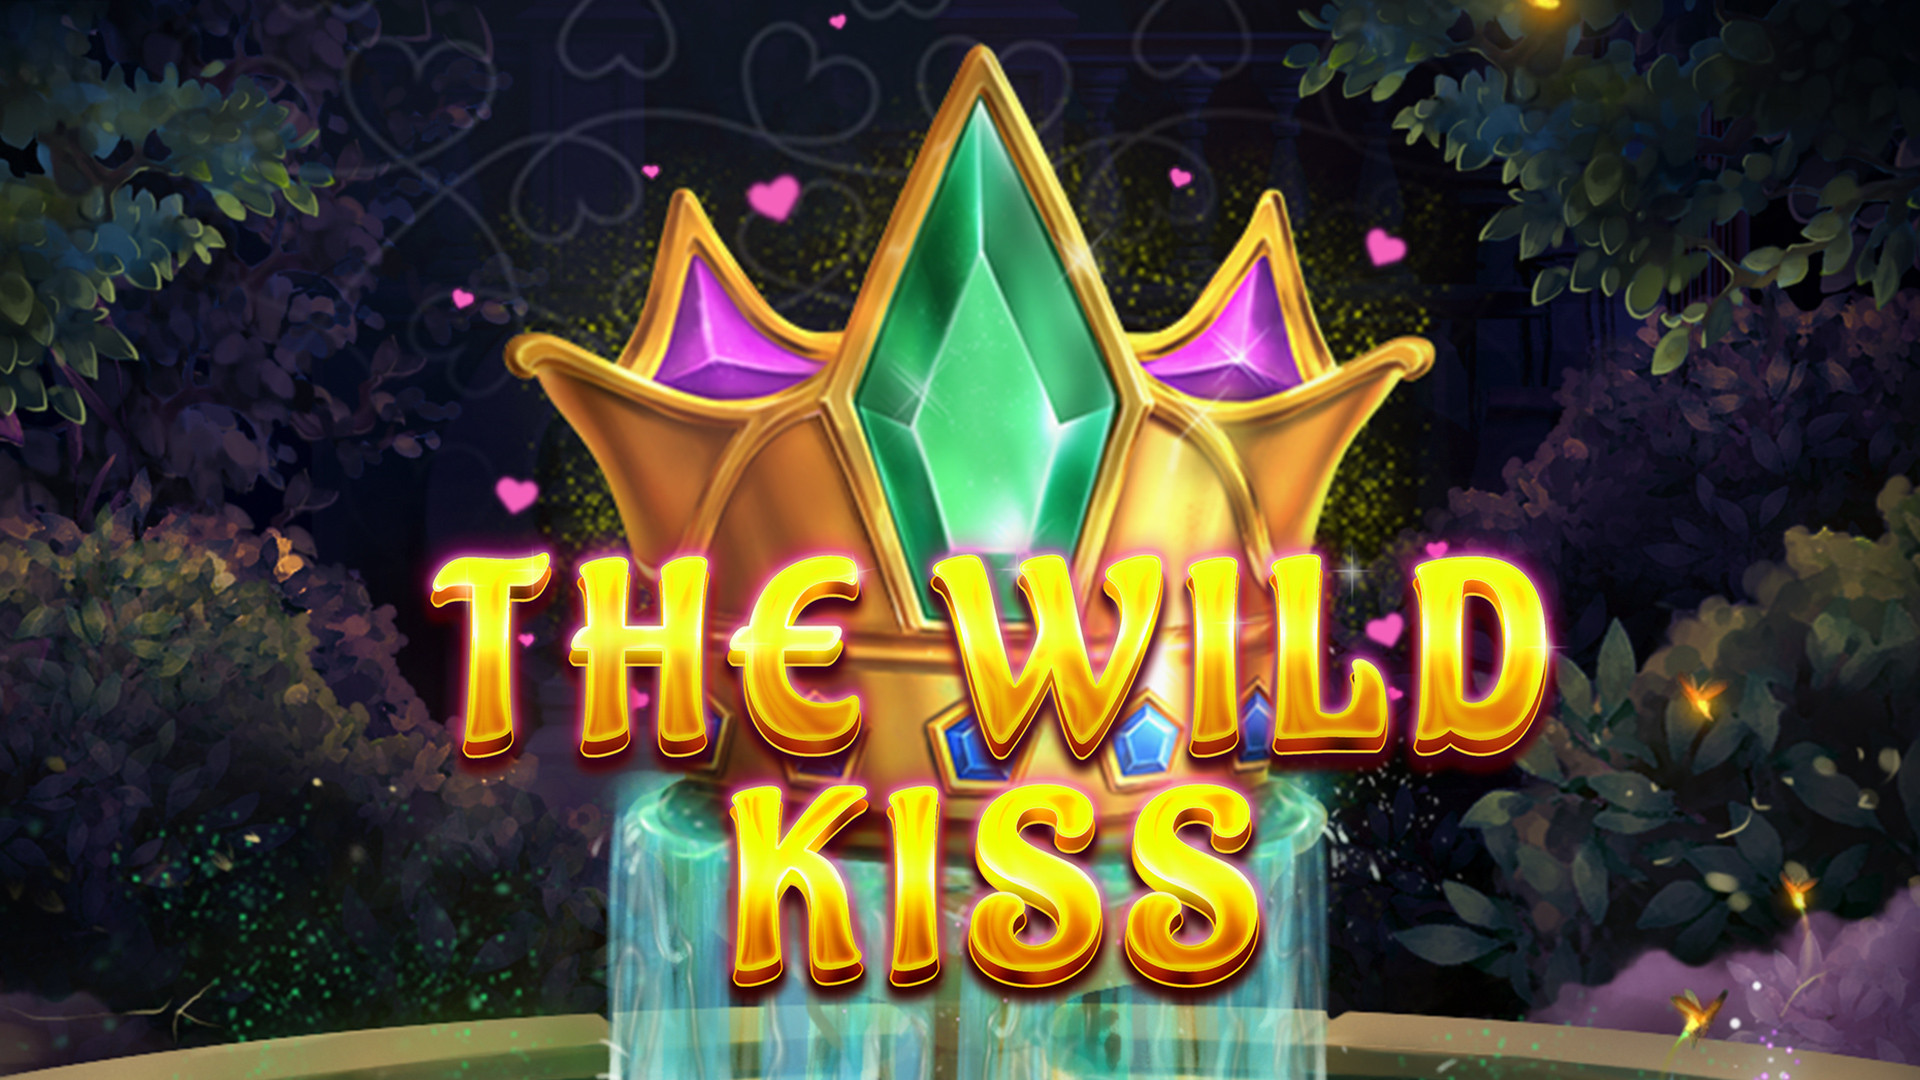 The Wild Kiss